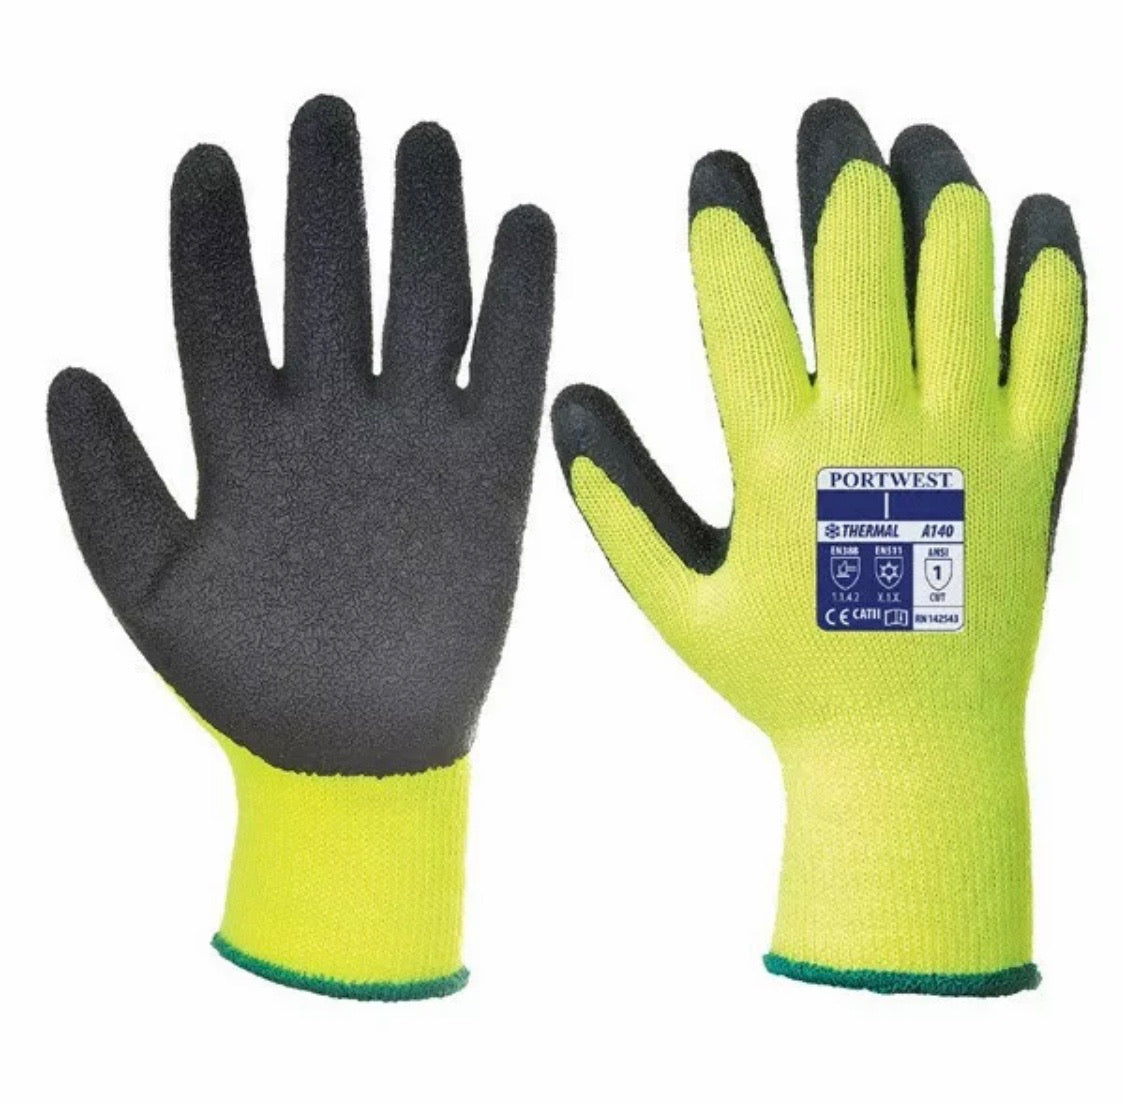 PORTWEST Thermal Grip Glove